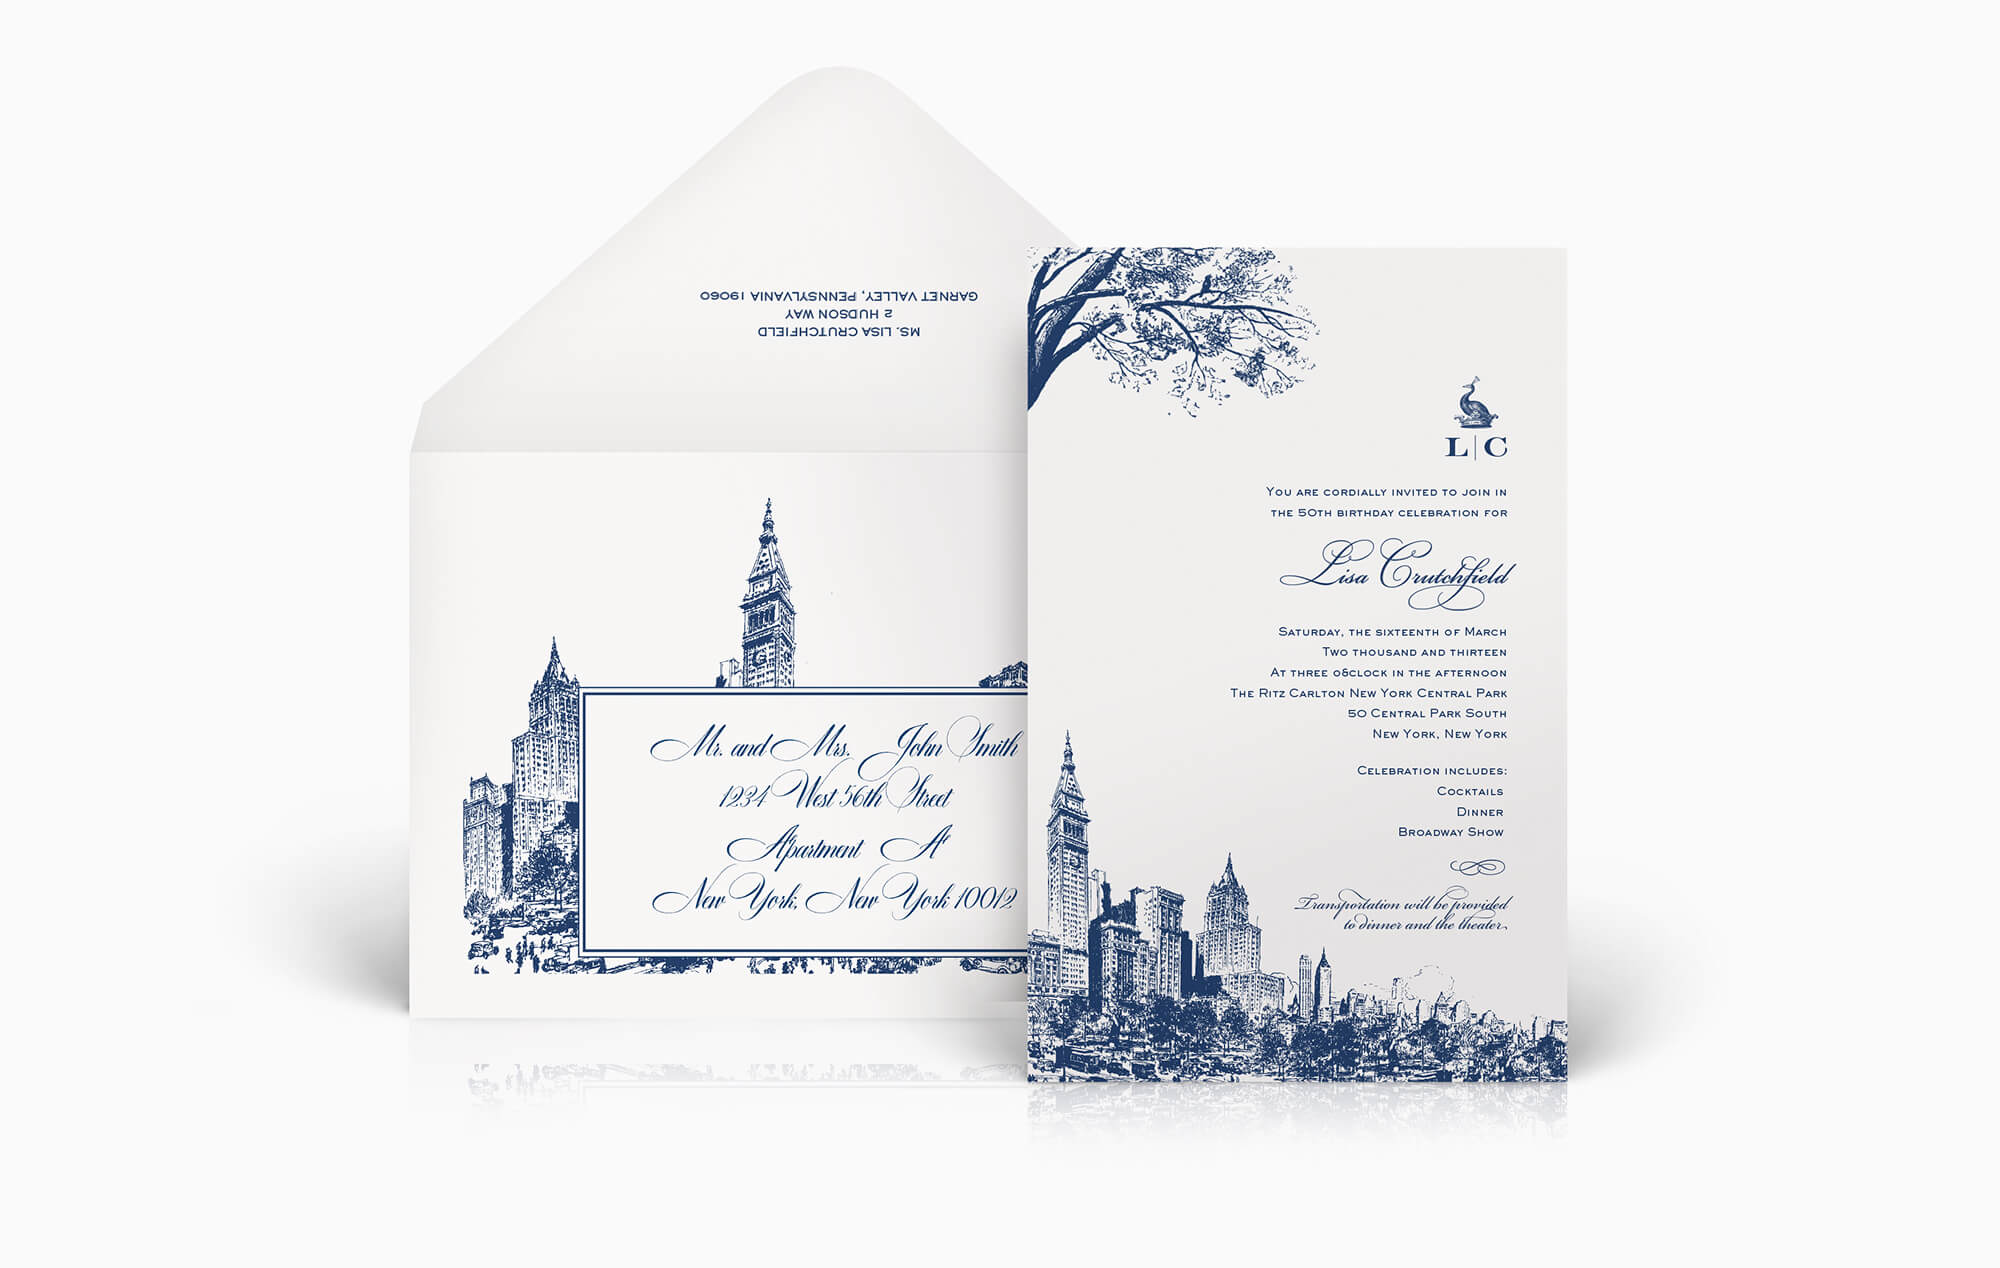 New York inspired invitation and envelope